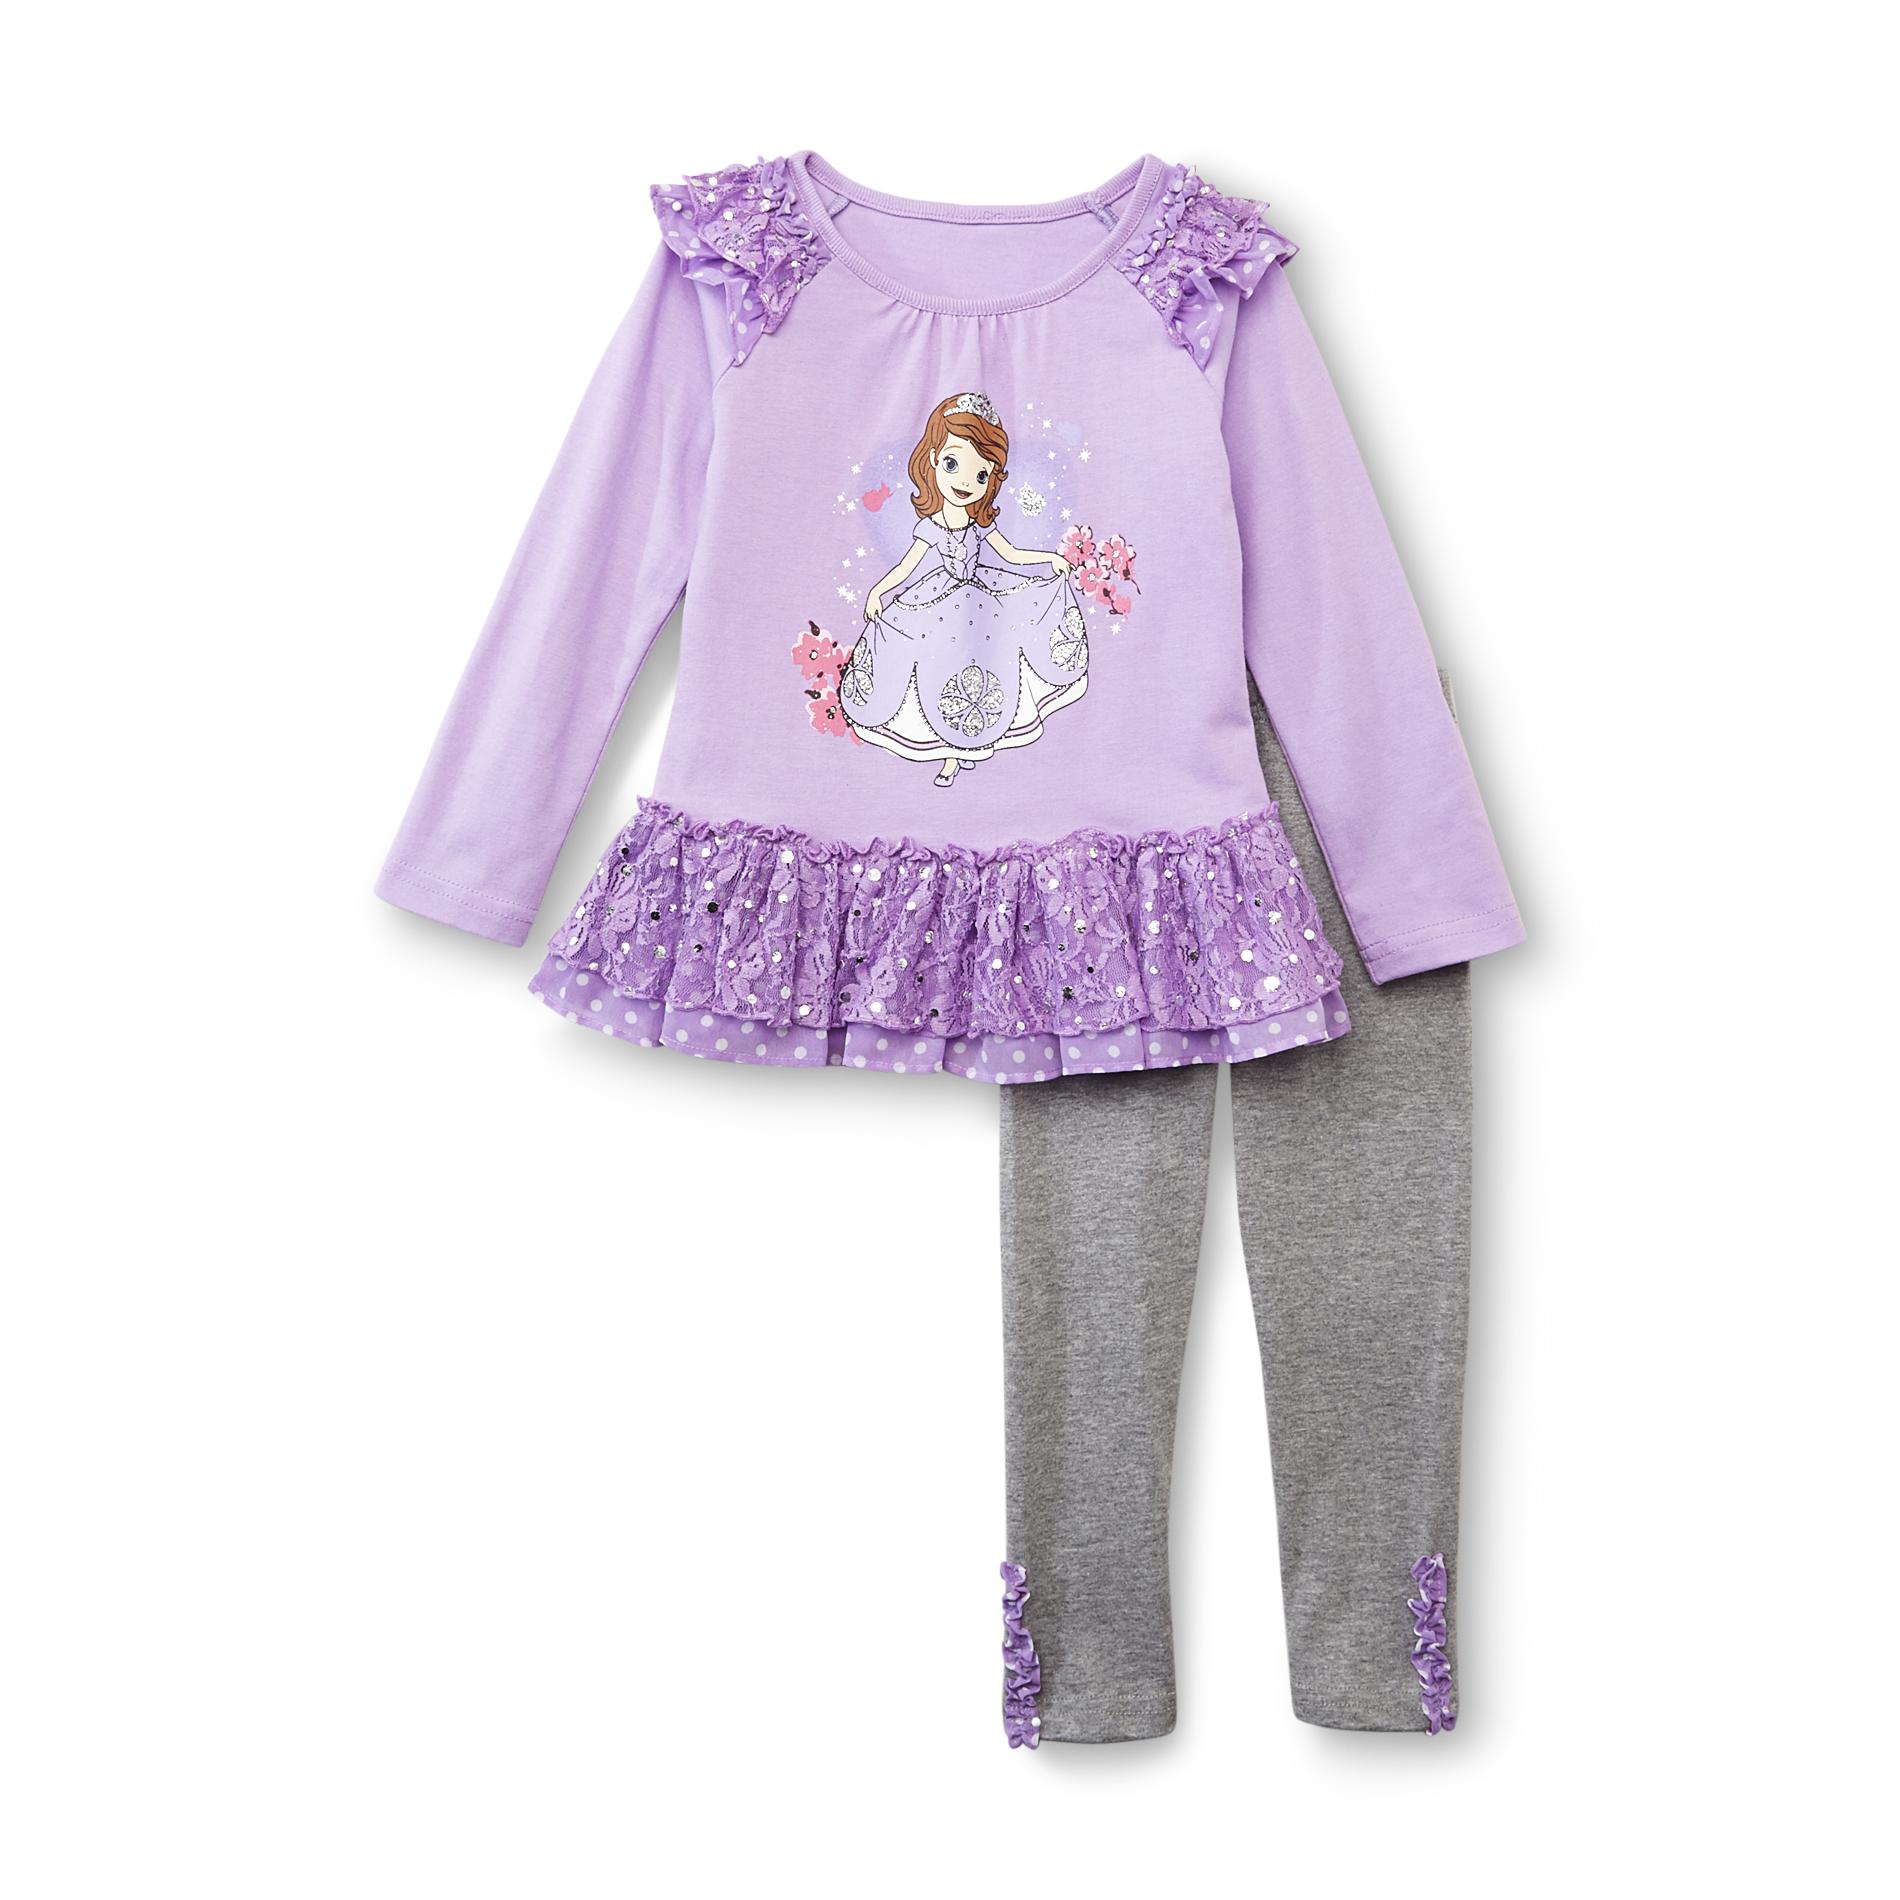 Disney Infant & Toddler Girl's Tunic Top & Leggings - Sofia The First